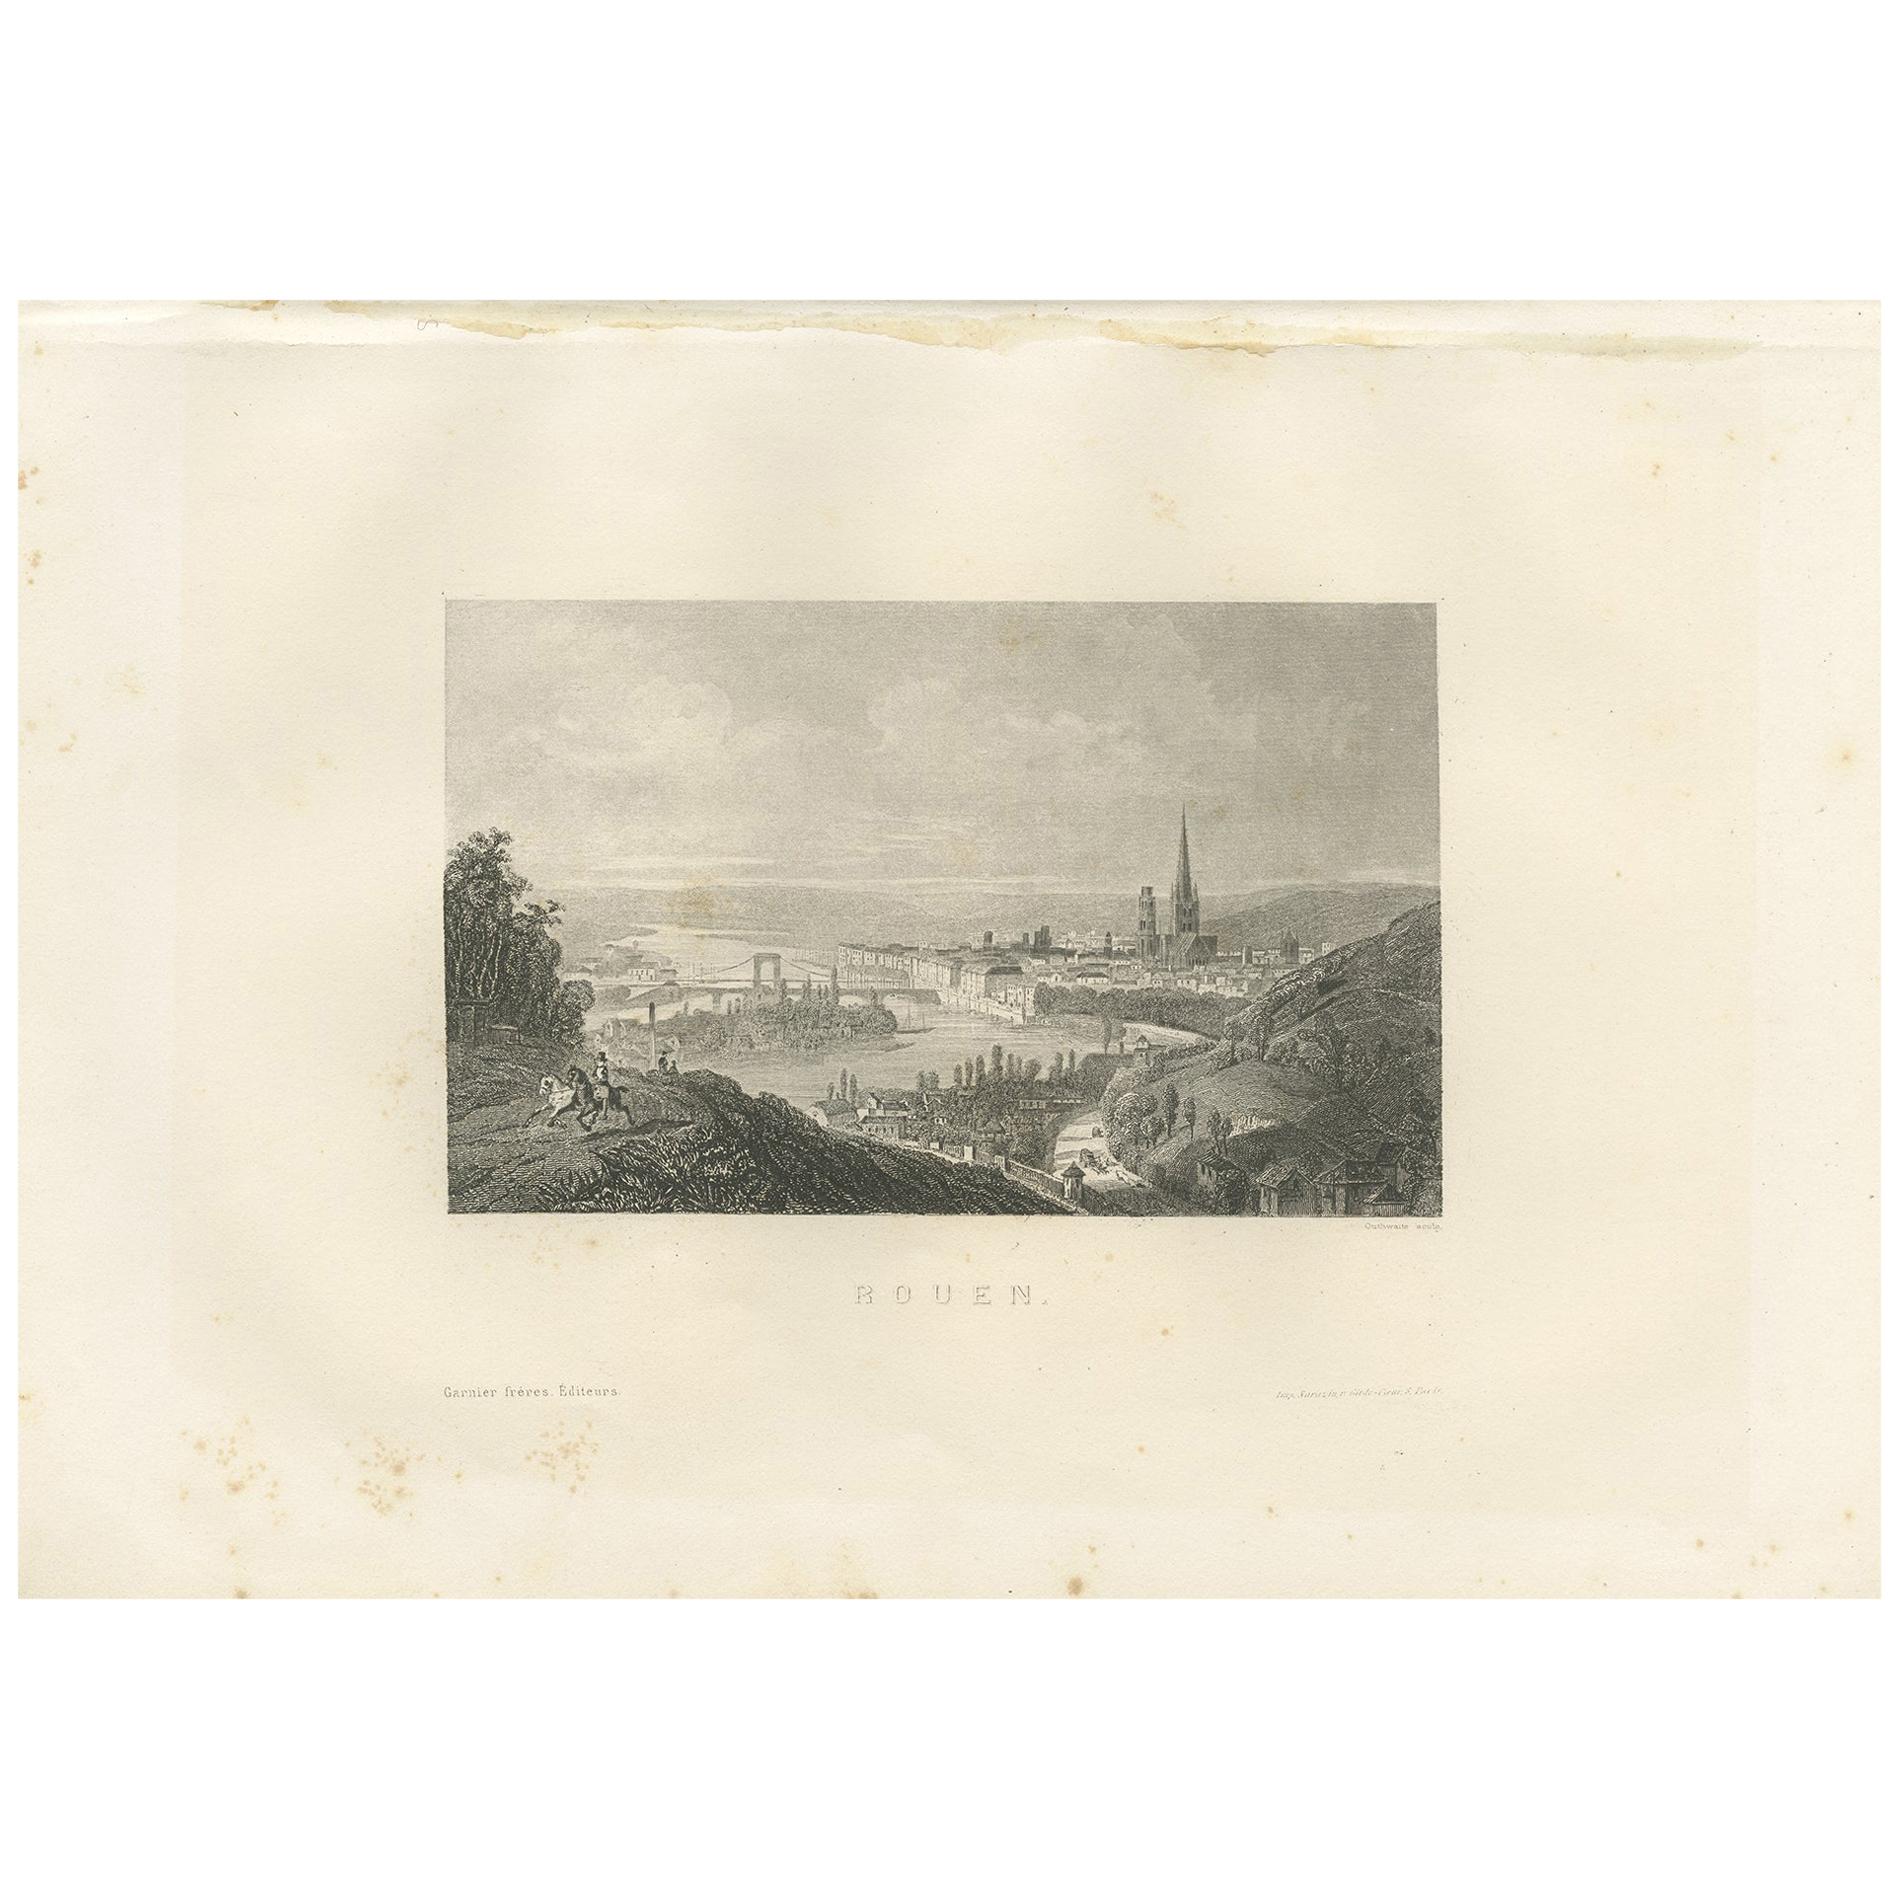 Antique Print of the City of Rouen by Grégoire '1883'